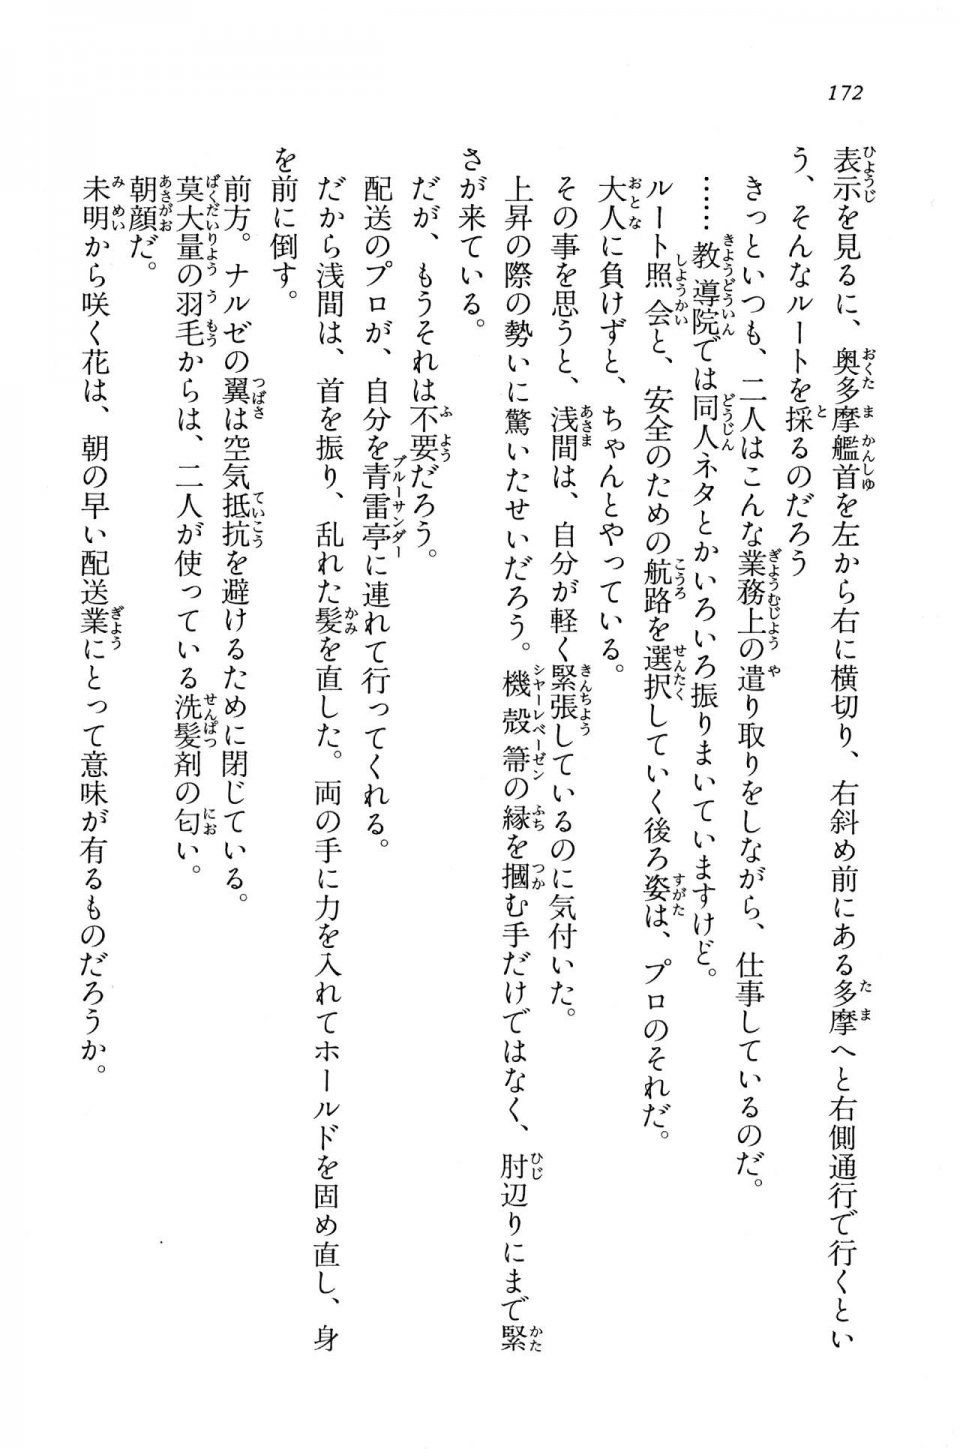 Kyoukai Senjou no Horizon BD Special Mininovel Vol 7(4A) - Photo #176